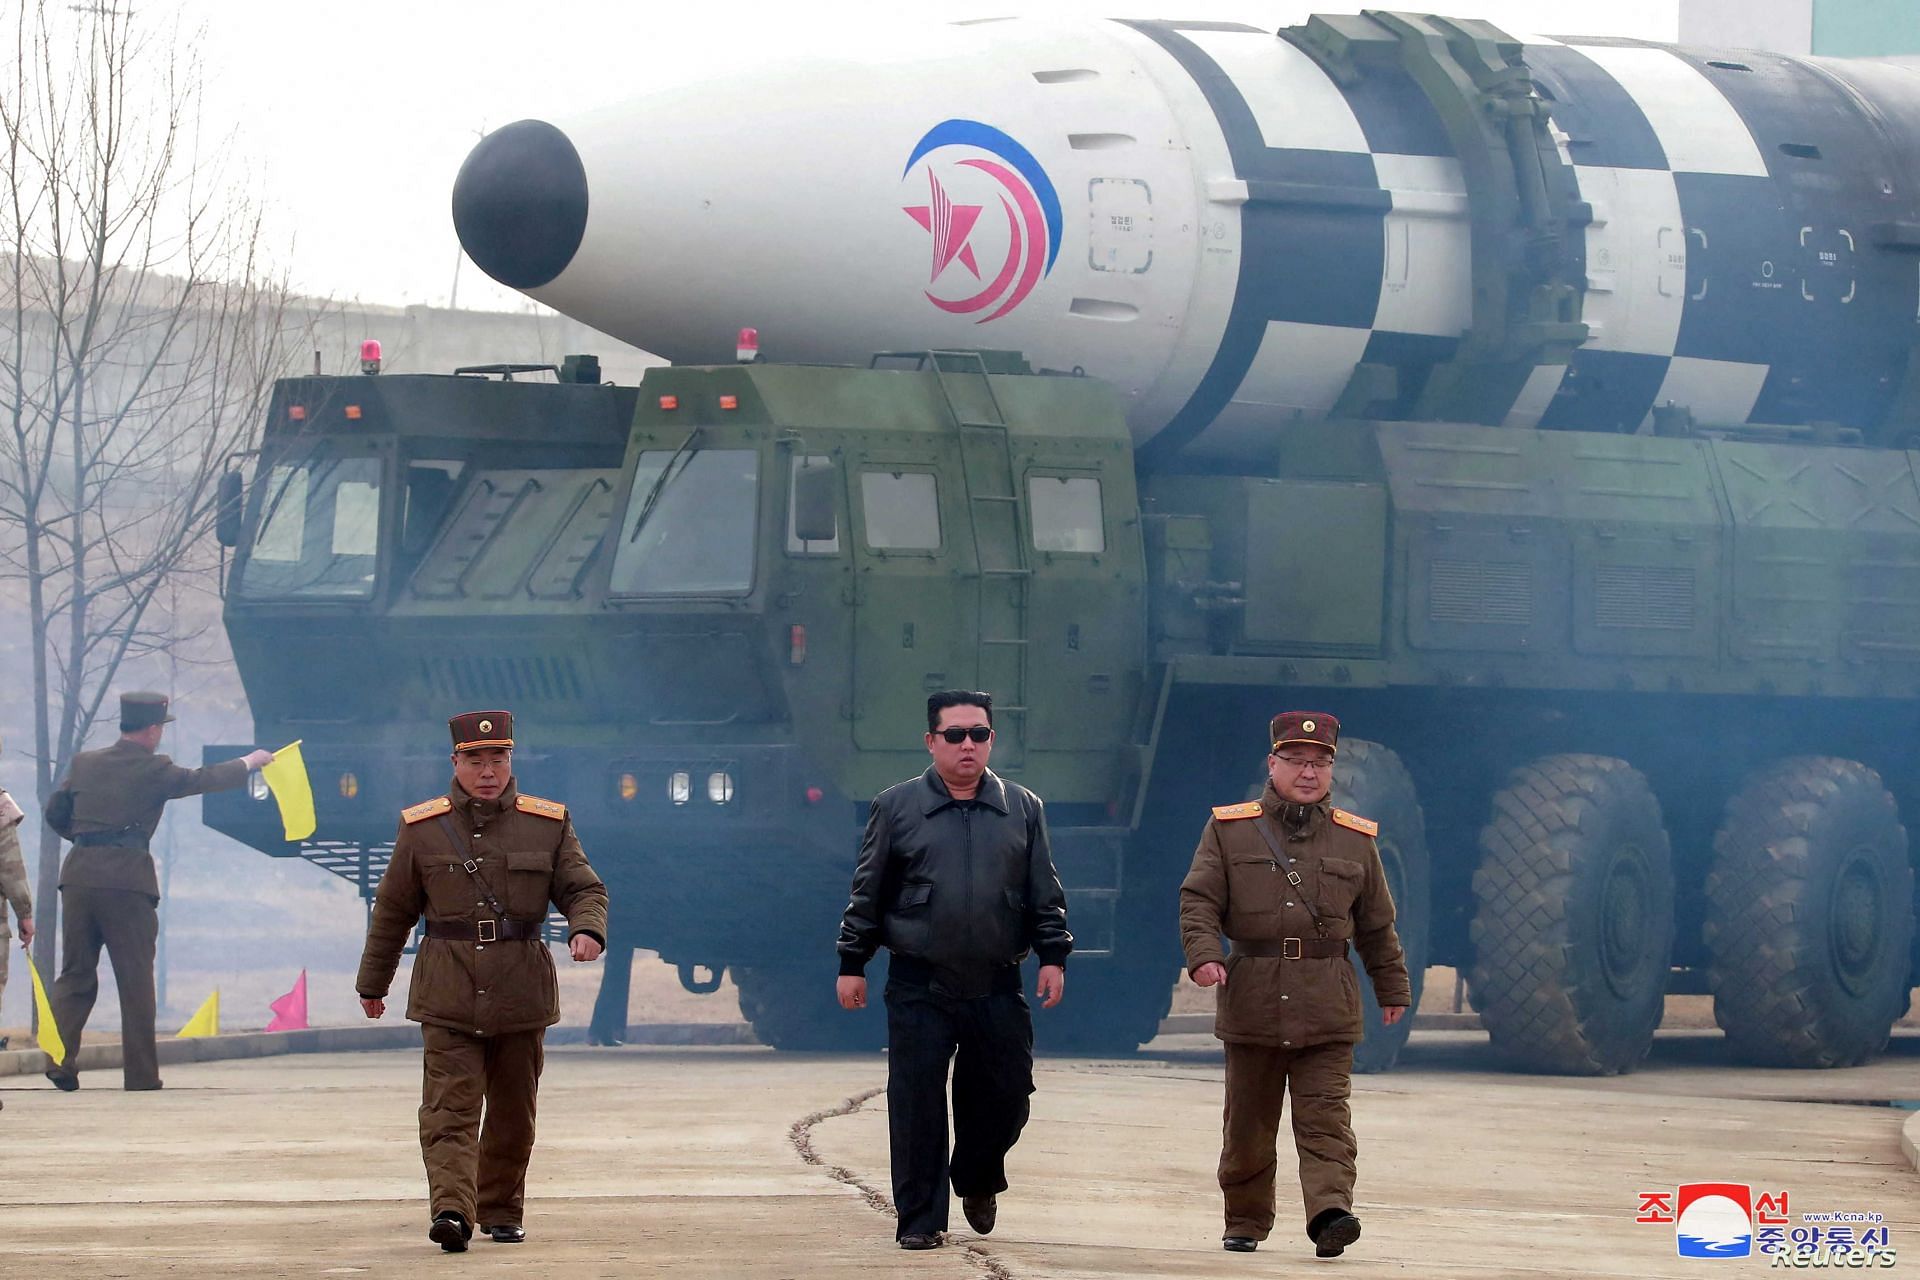 Kim Jong-un reportedly guiding the missile launch (Image via Korean Central News Agency)